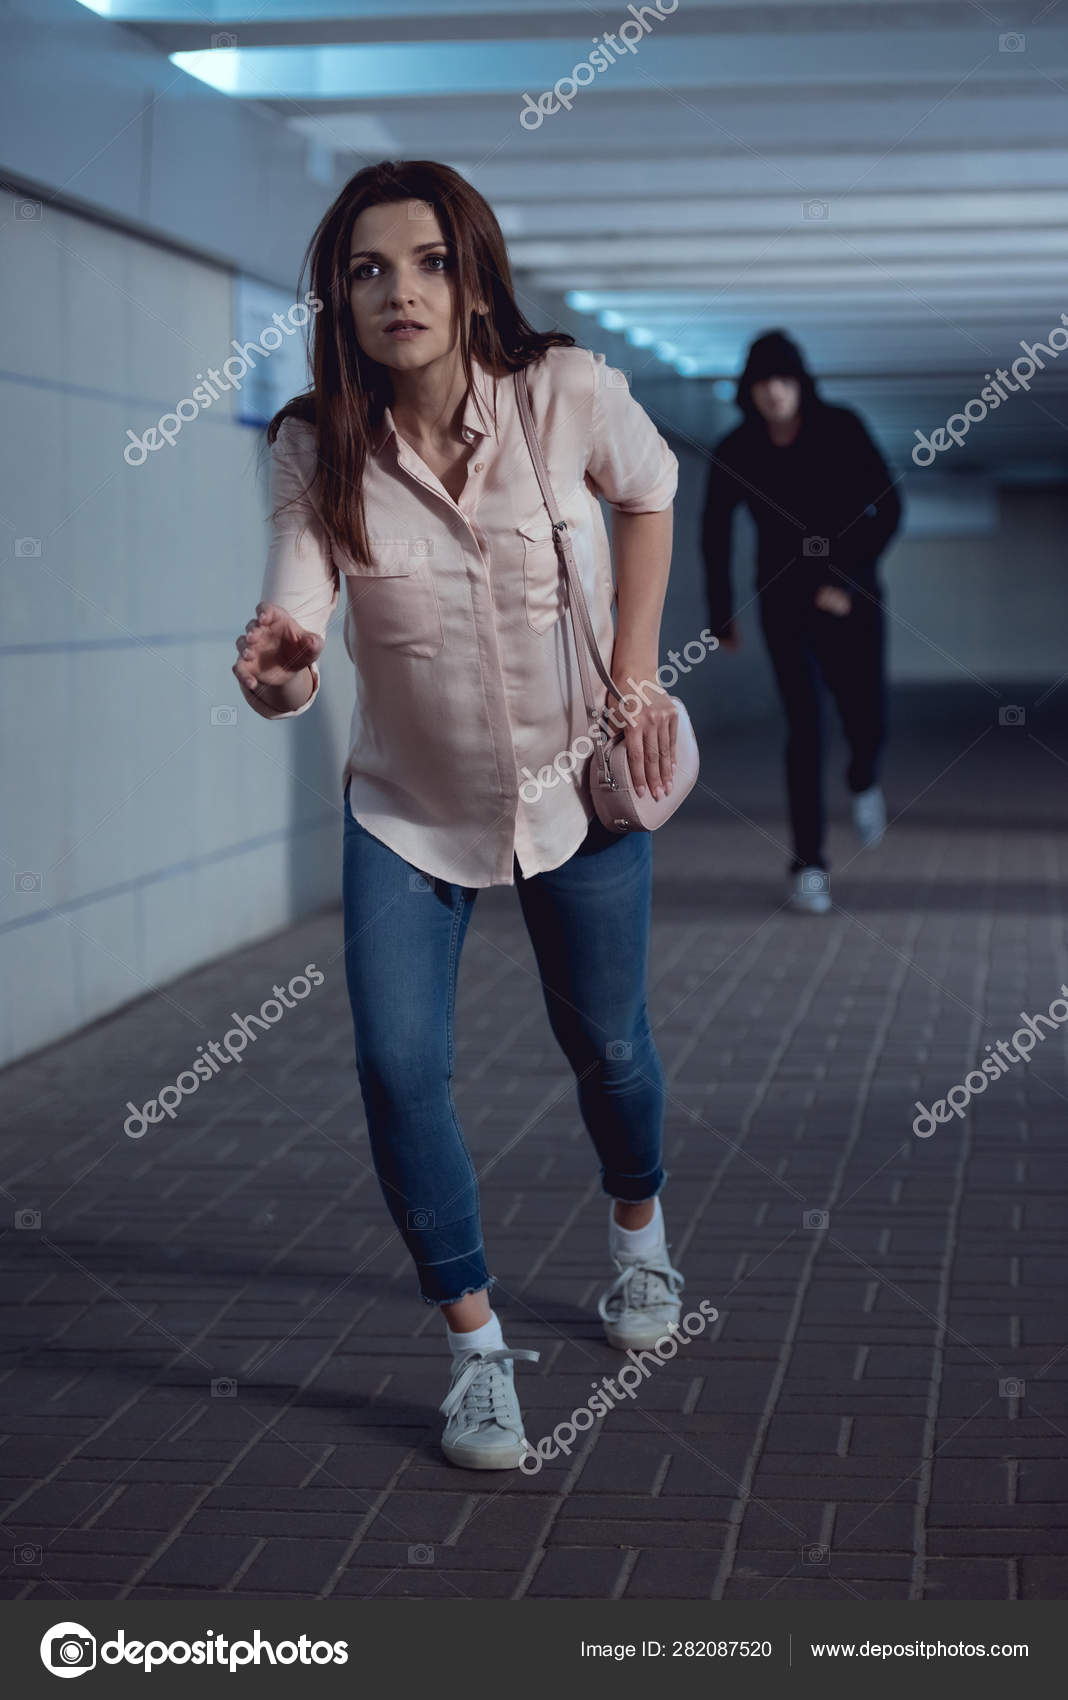 depositphotos_282087520-stock-photo-frightened-woman-running-away-thief.jpg